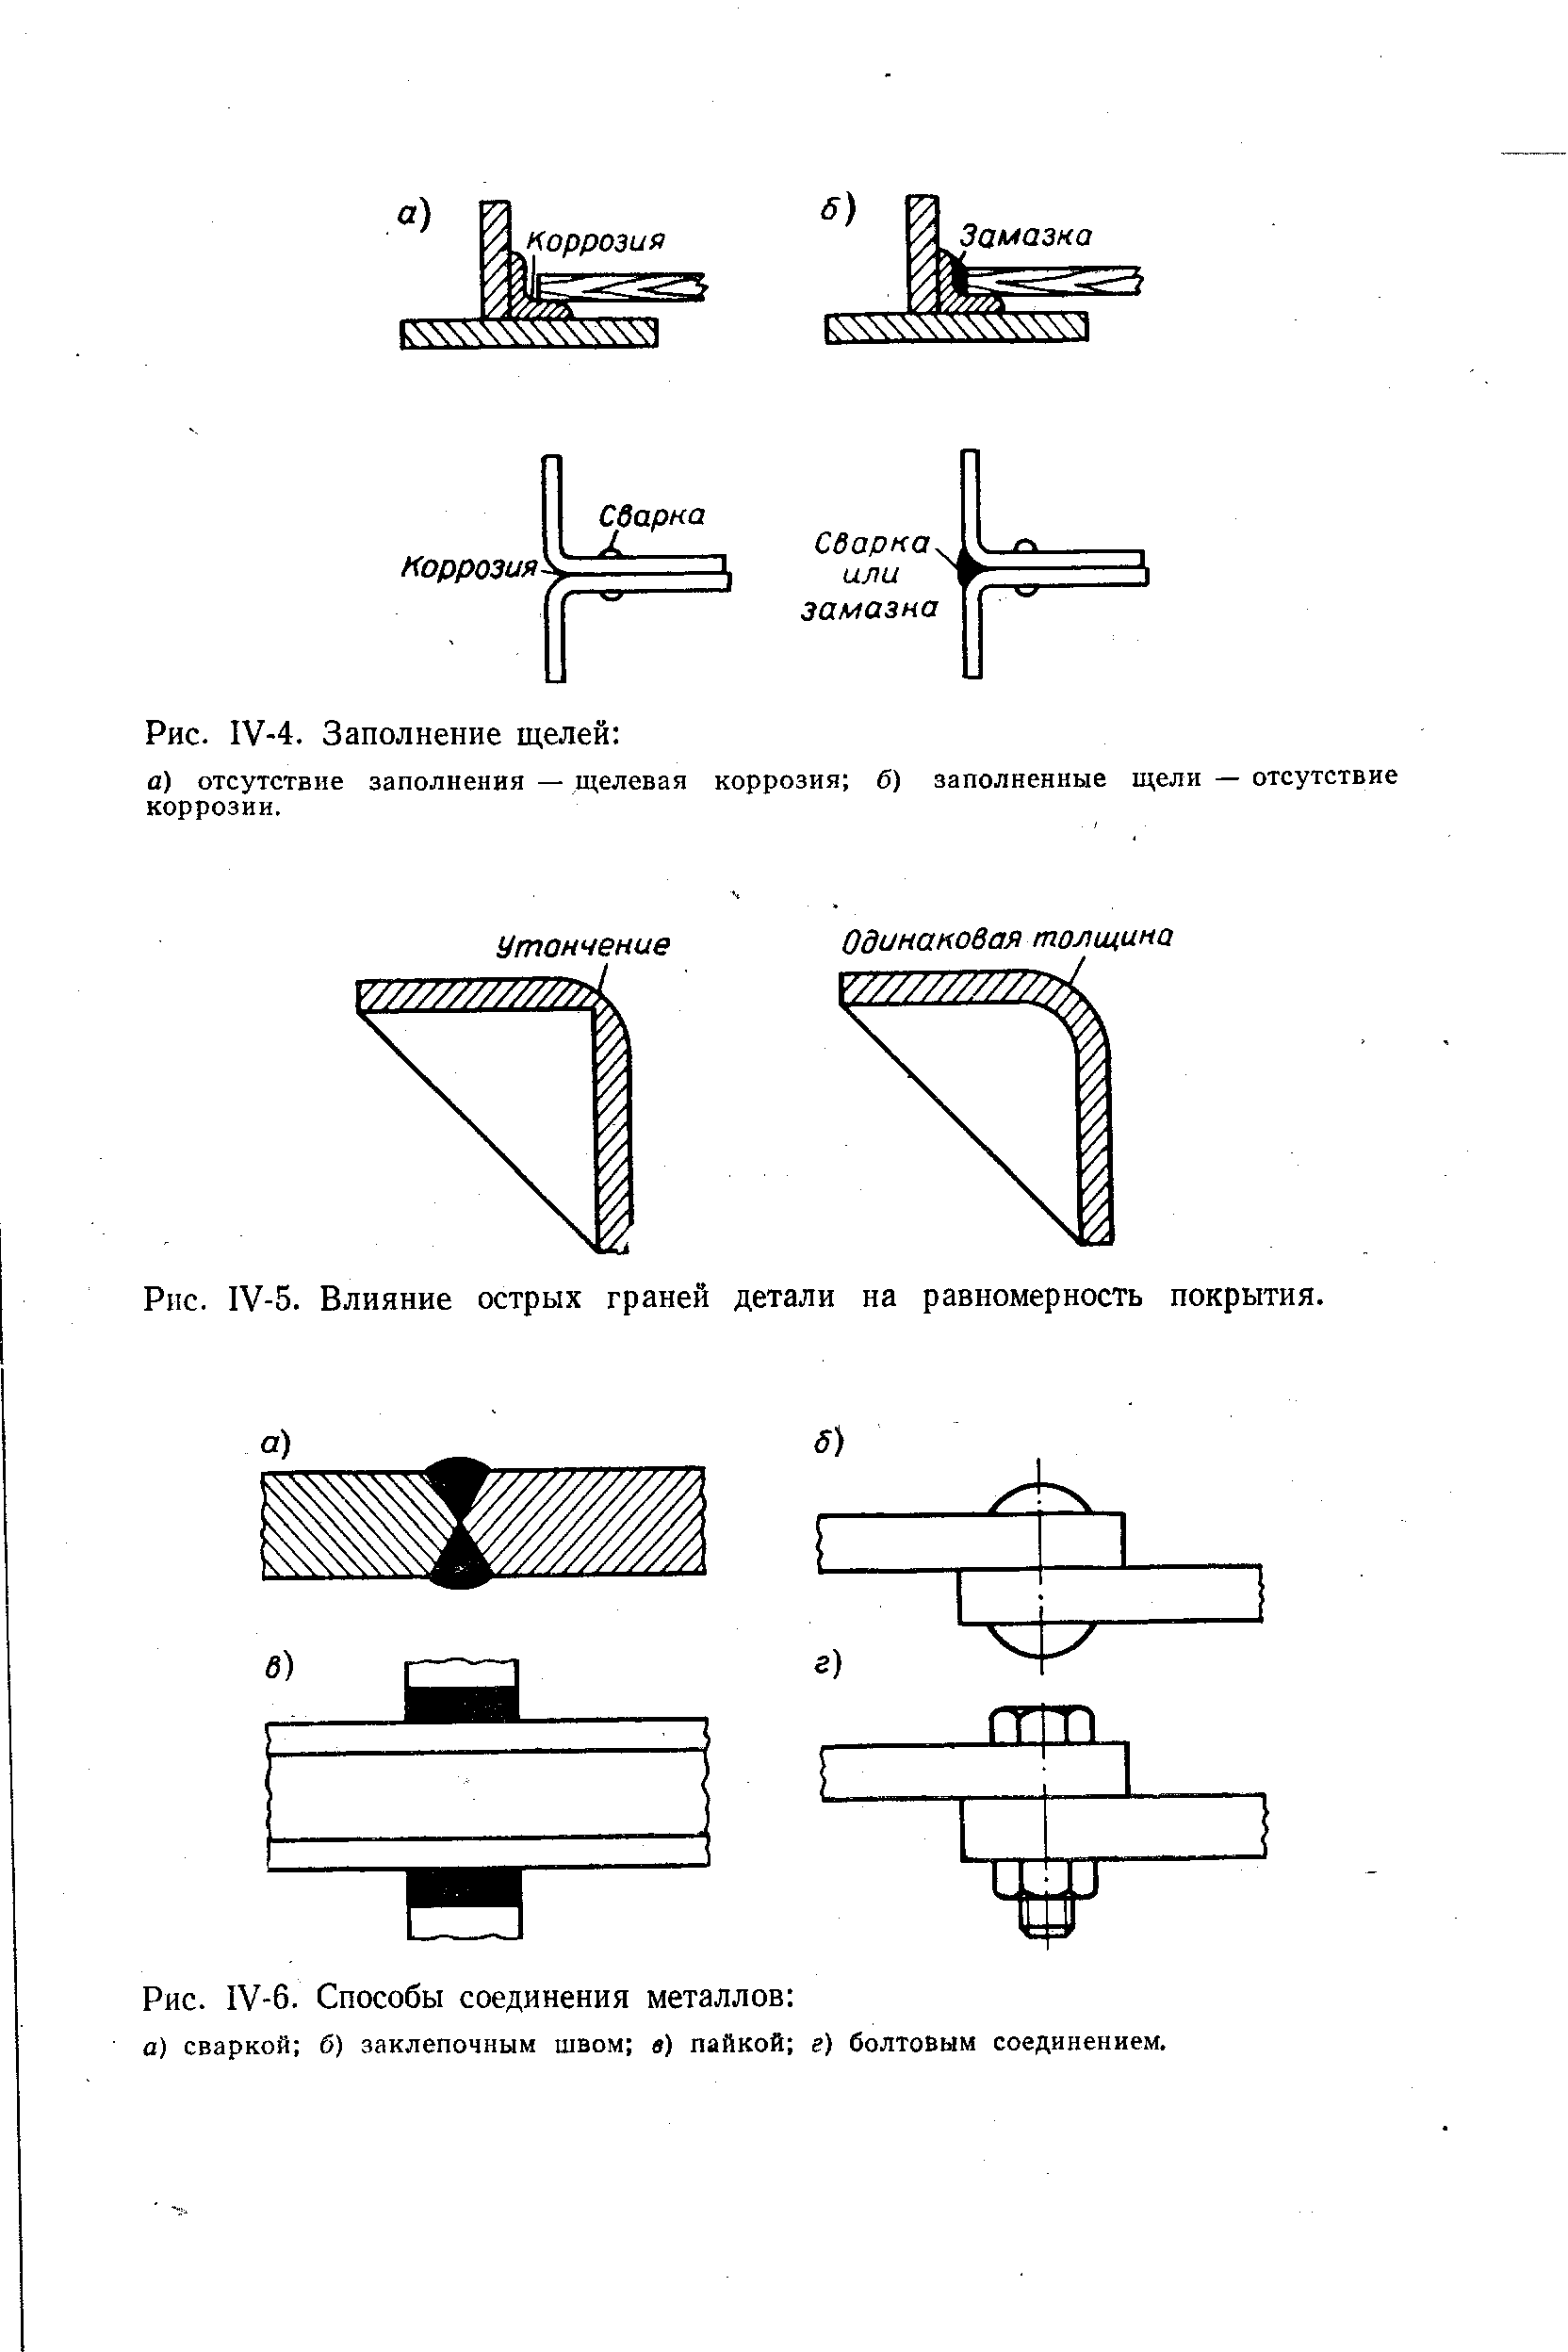 Типы соединения металлов